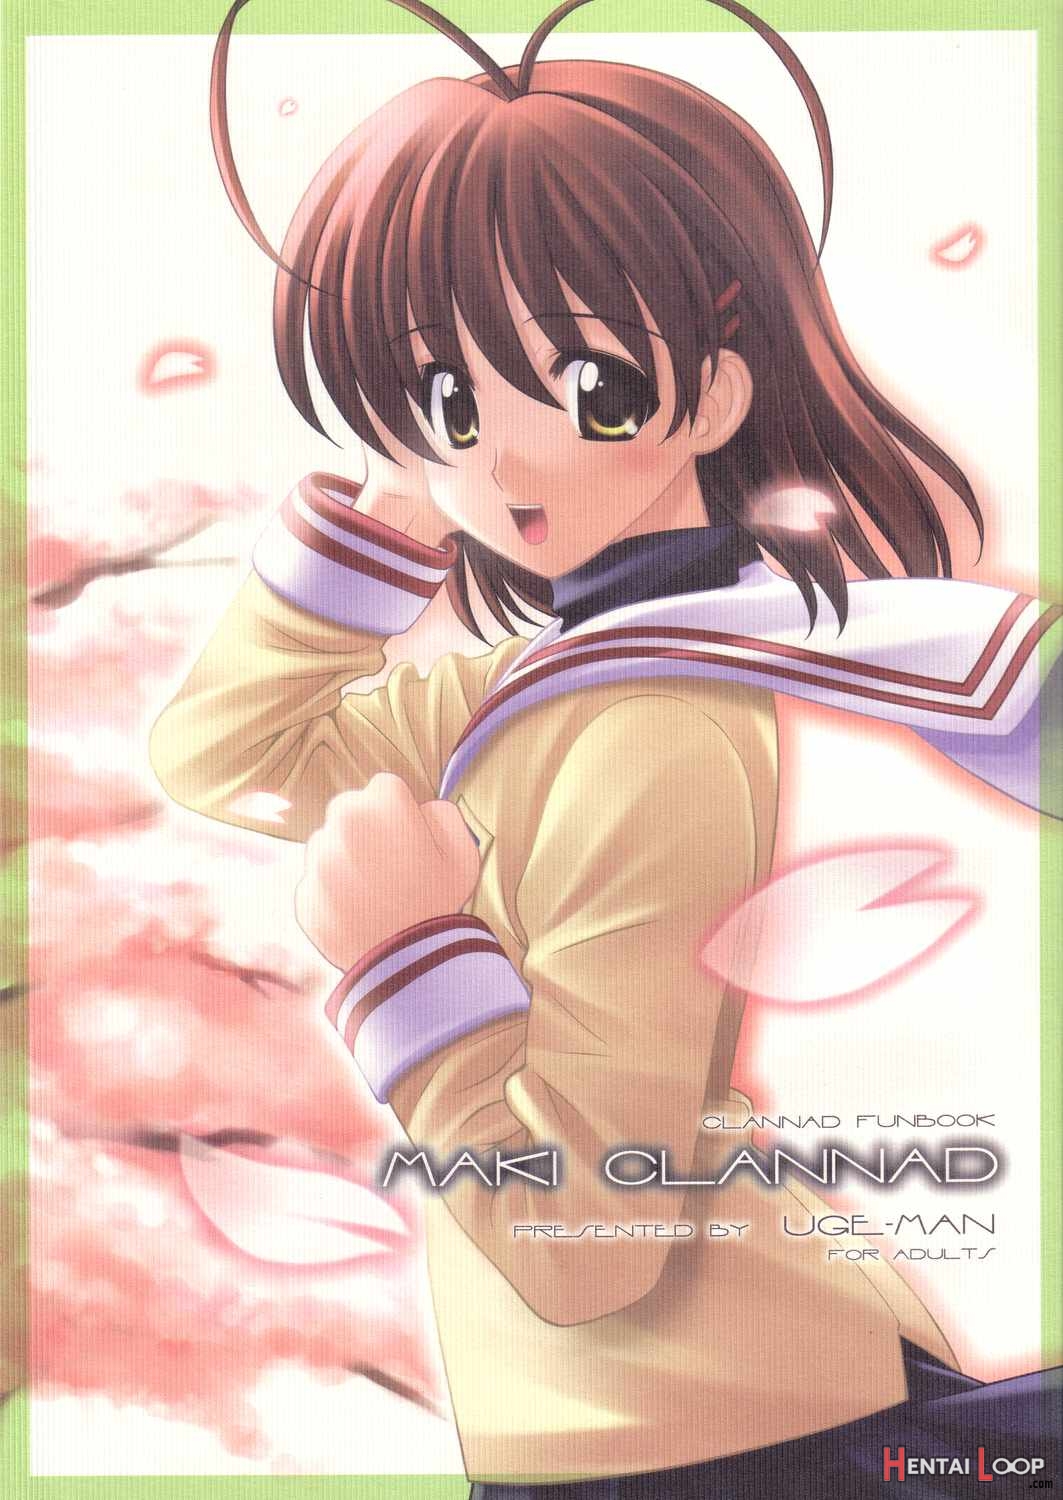 Maki Clannad page 1